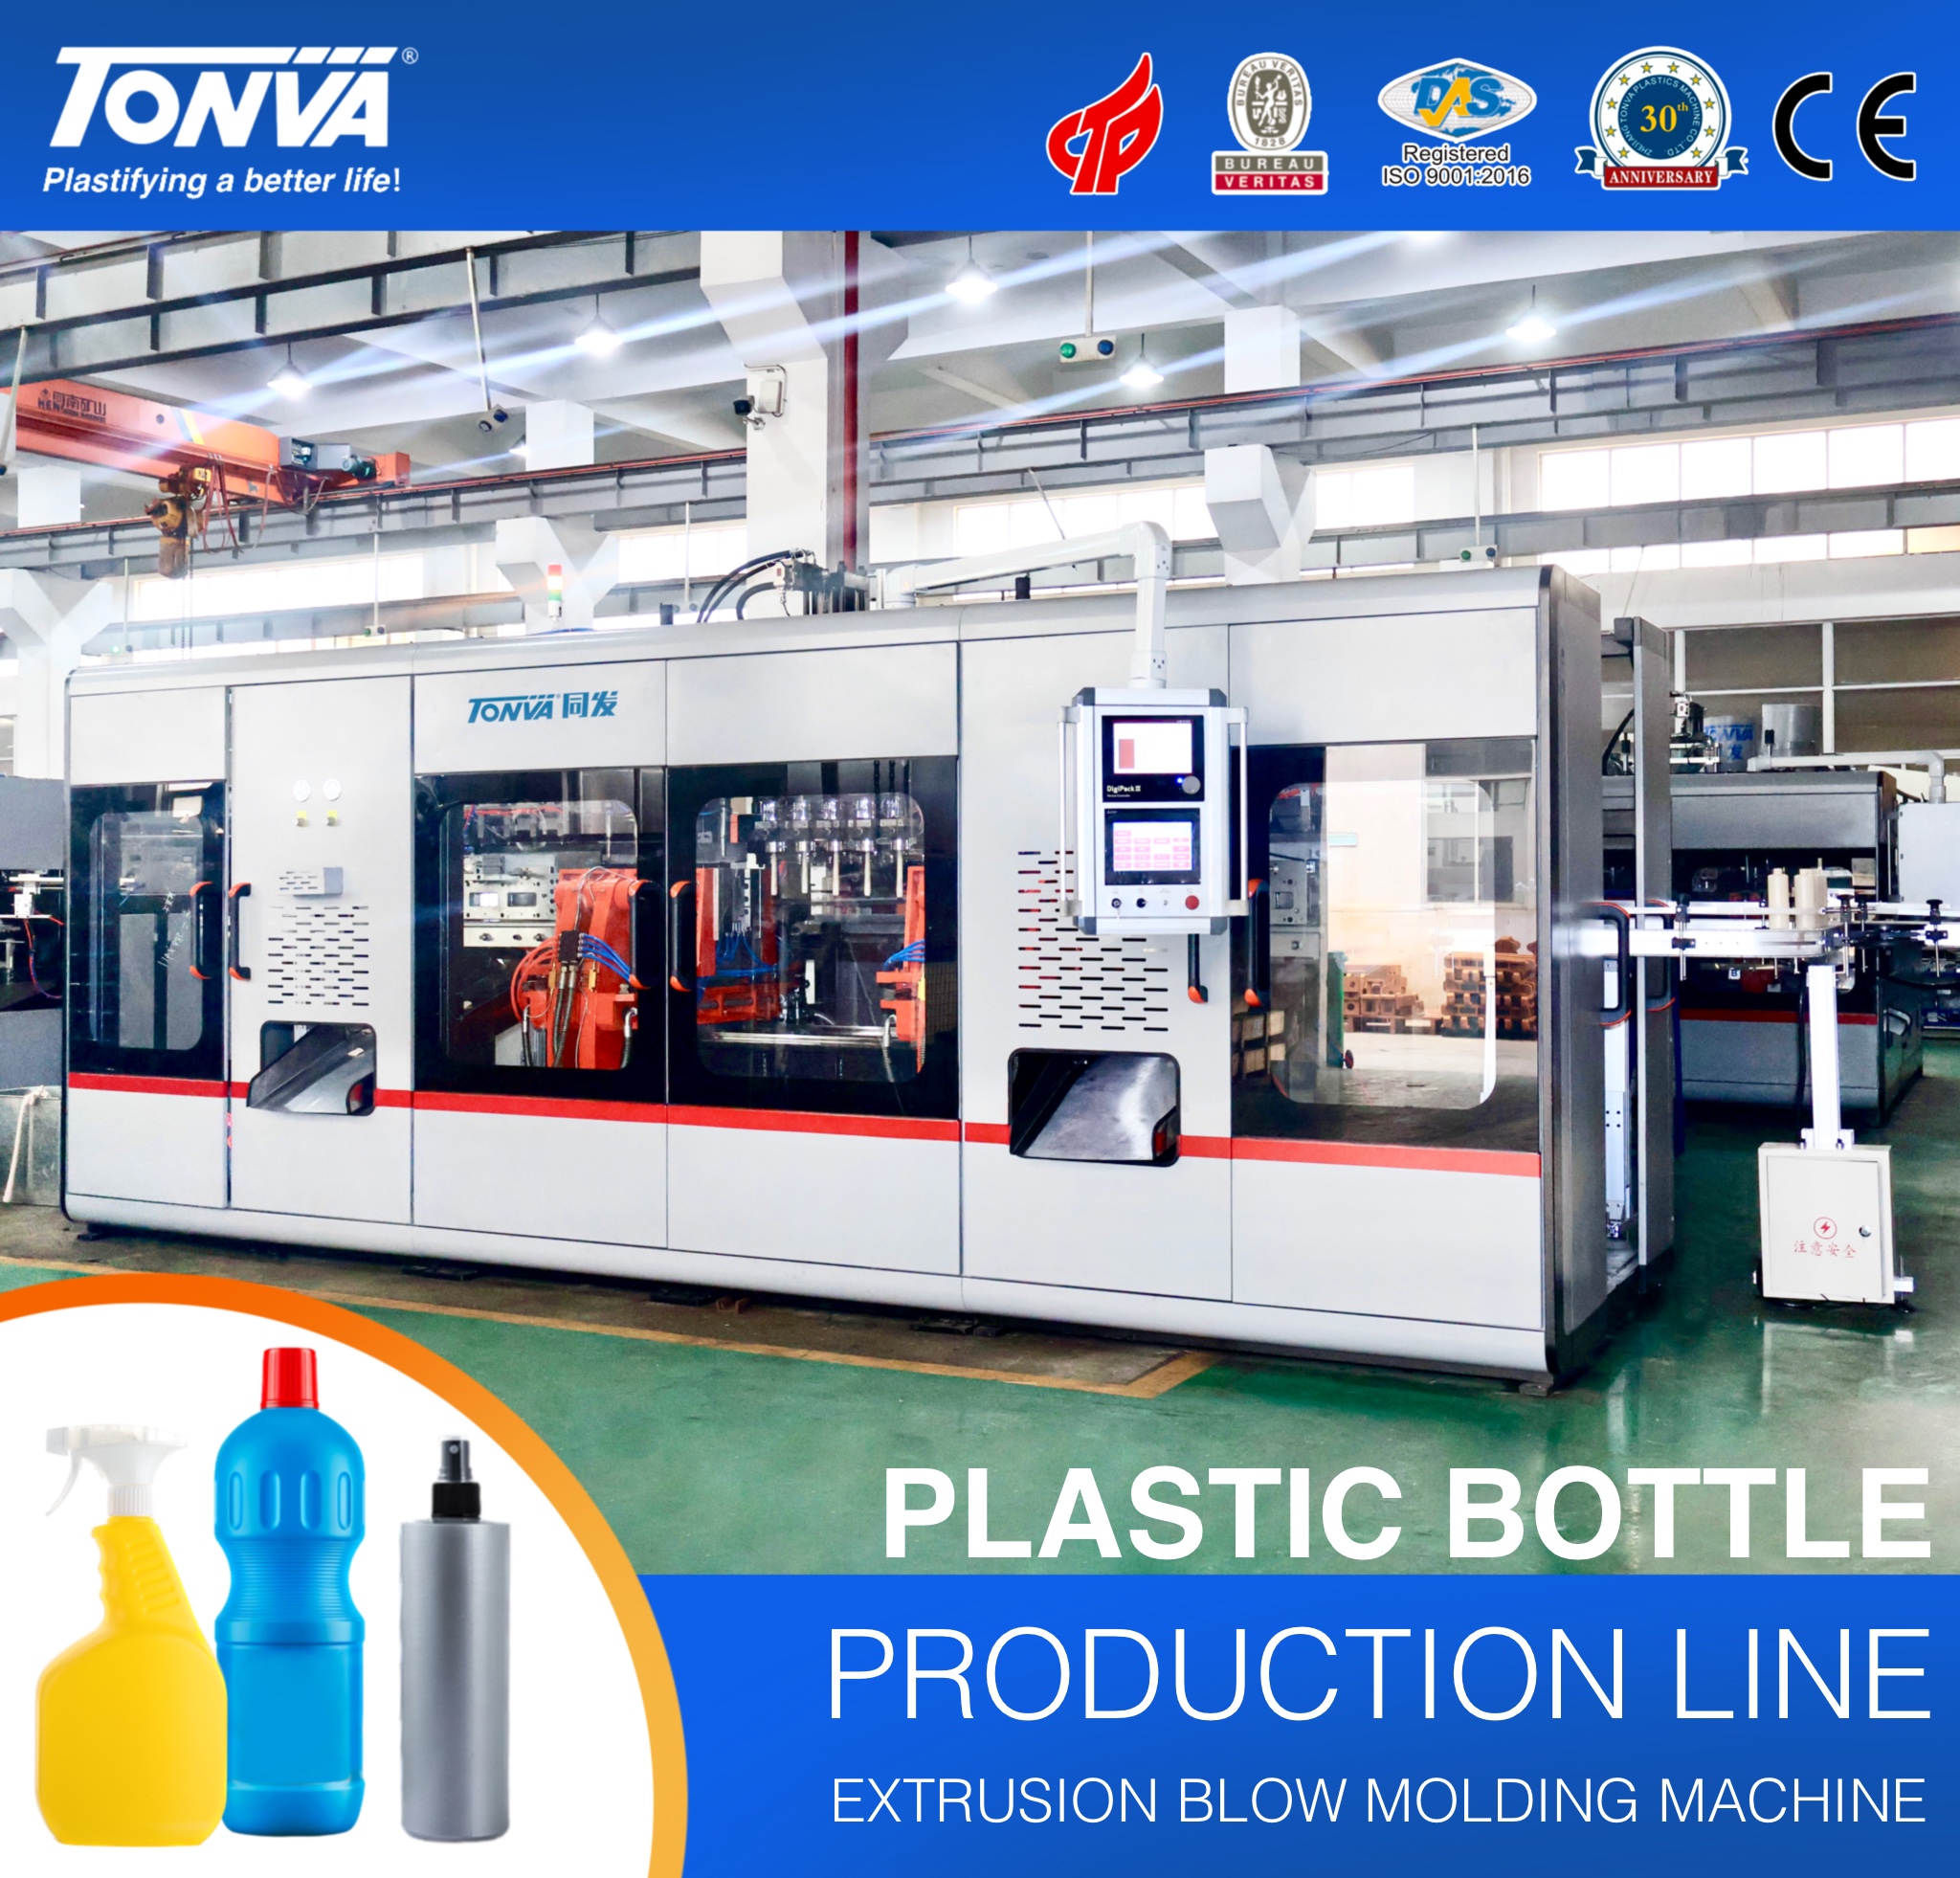 Stroj za puhanje ekstruzijom plastike za izradu plastične boce deterdženta, boce za čišćenje i boce s raspršivačem Istaknuta slika